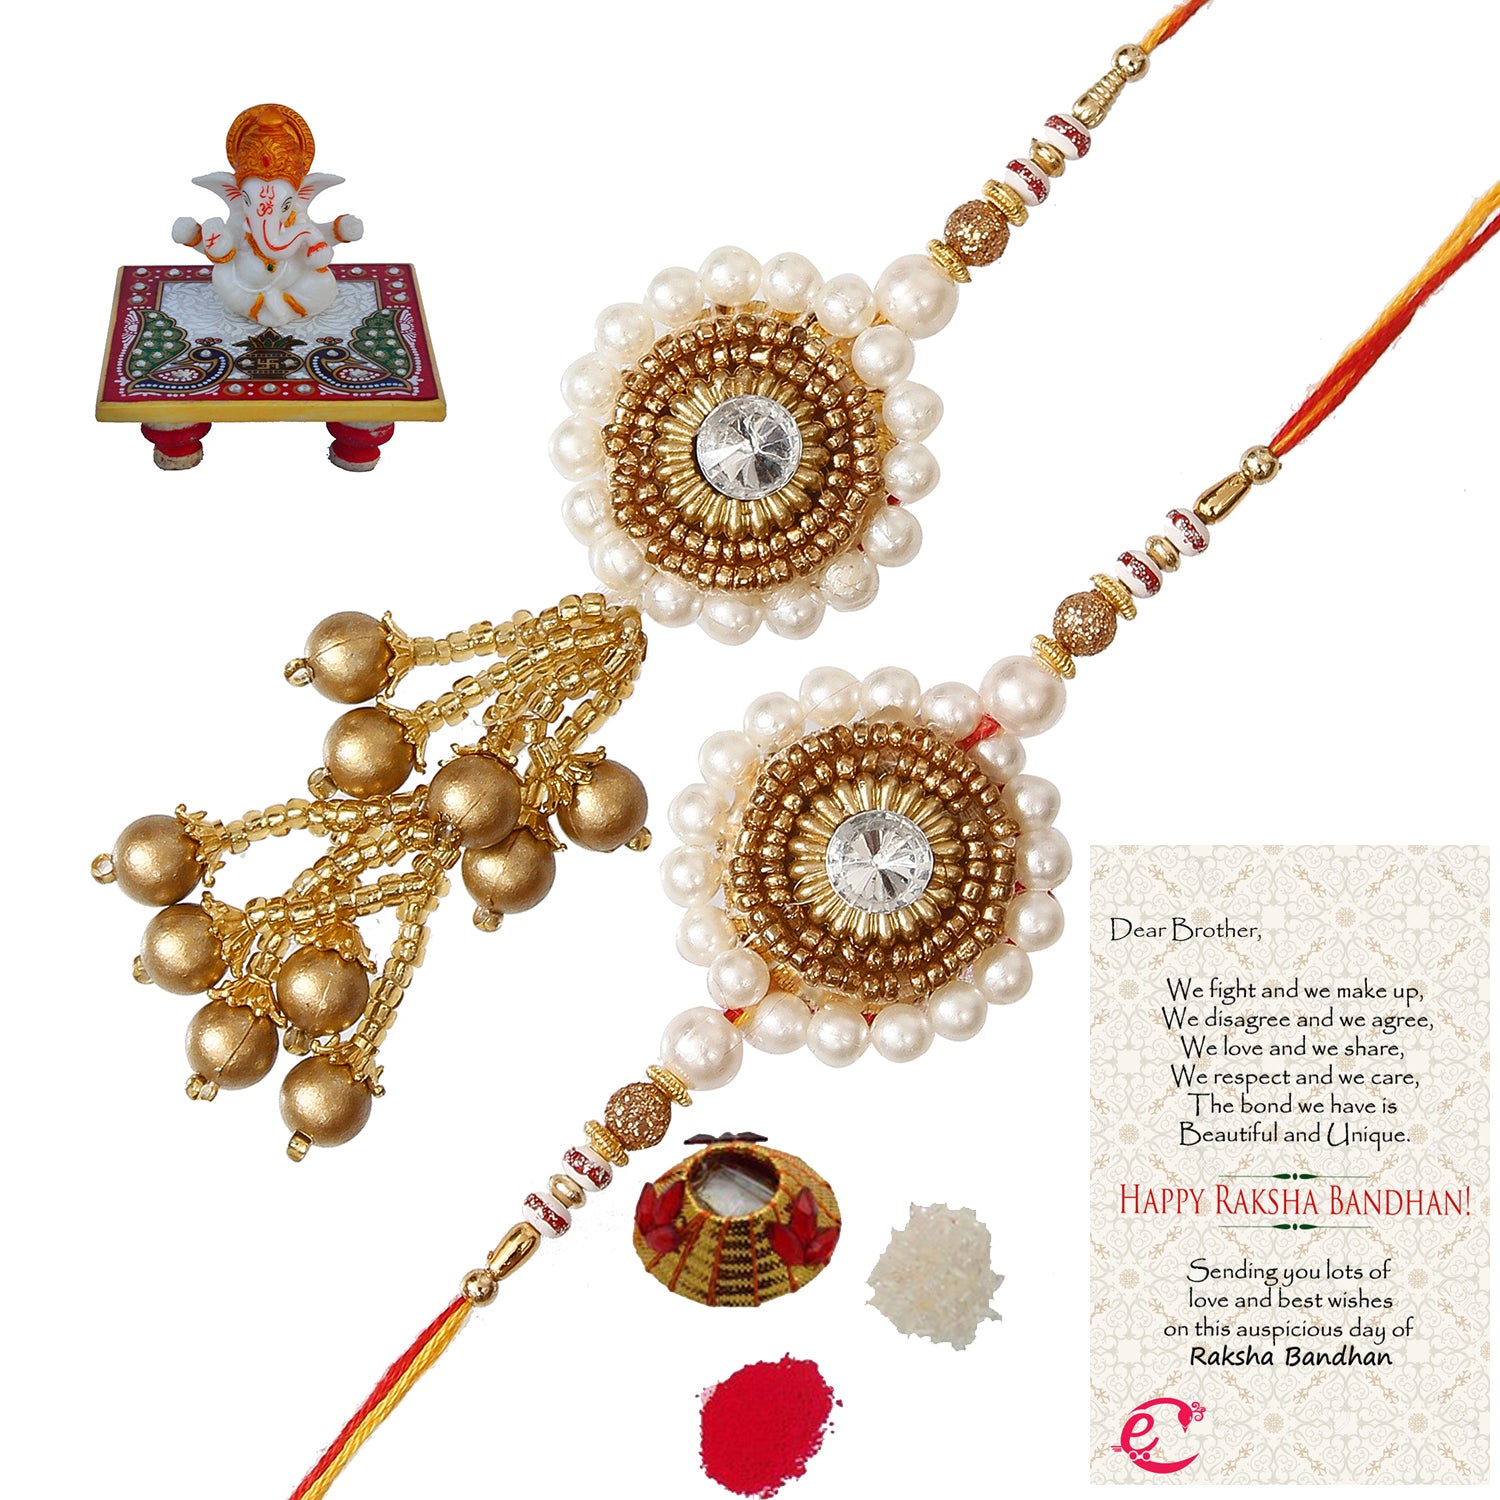 Designer Bhaiya Bhabhi Rakhi with Lord Ganesha Marble Chowki and Roli Tikka Matki, Best Wishes Greeting Card